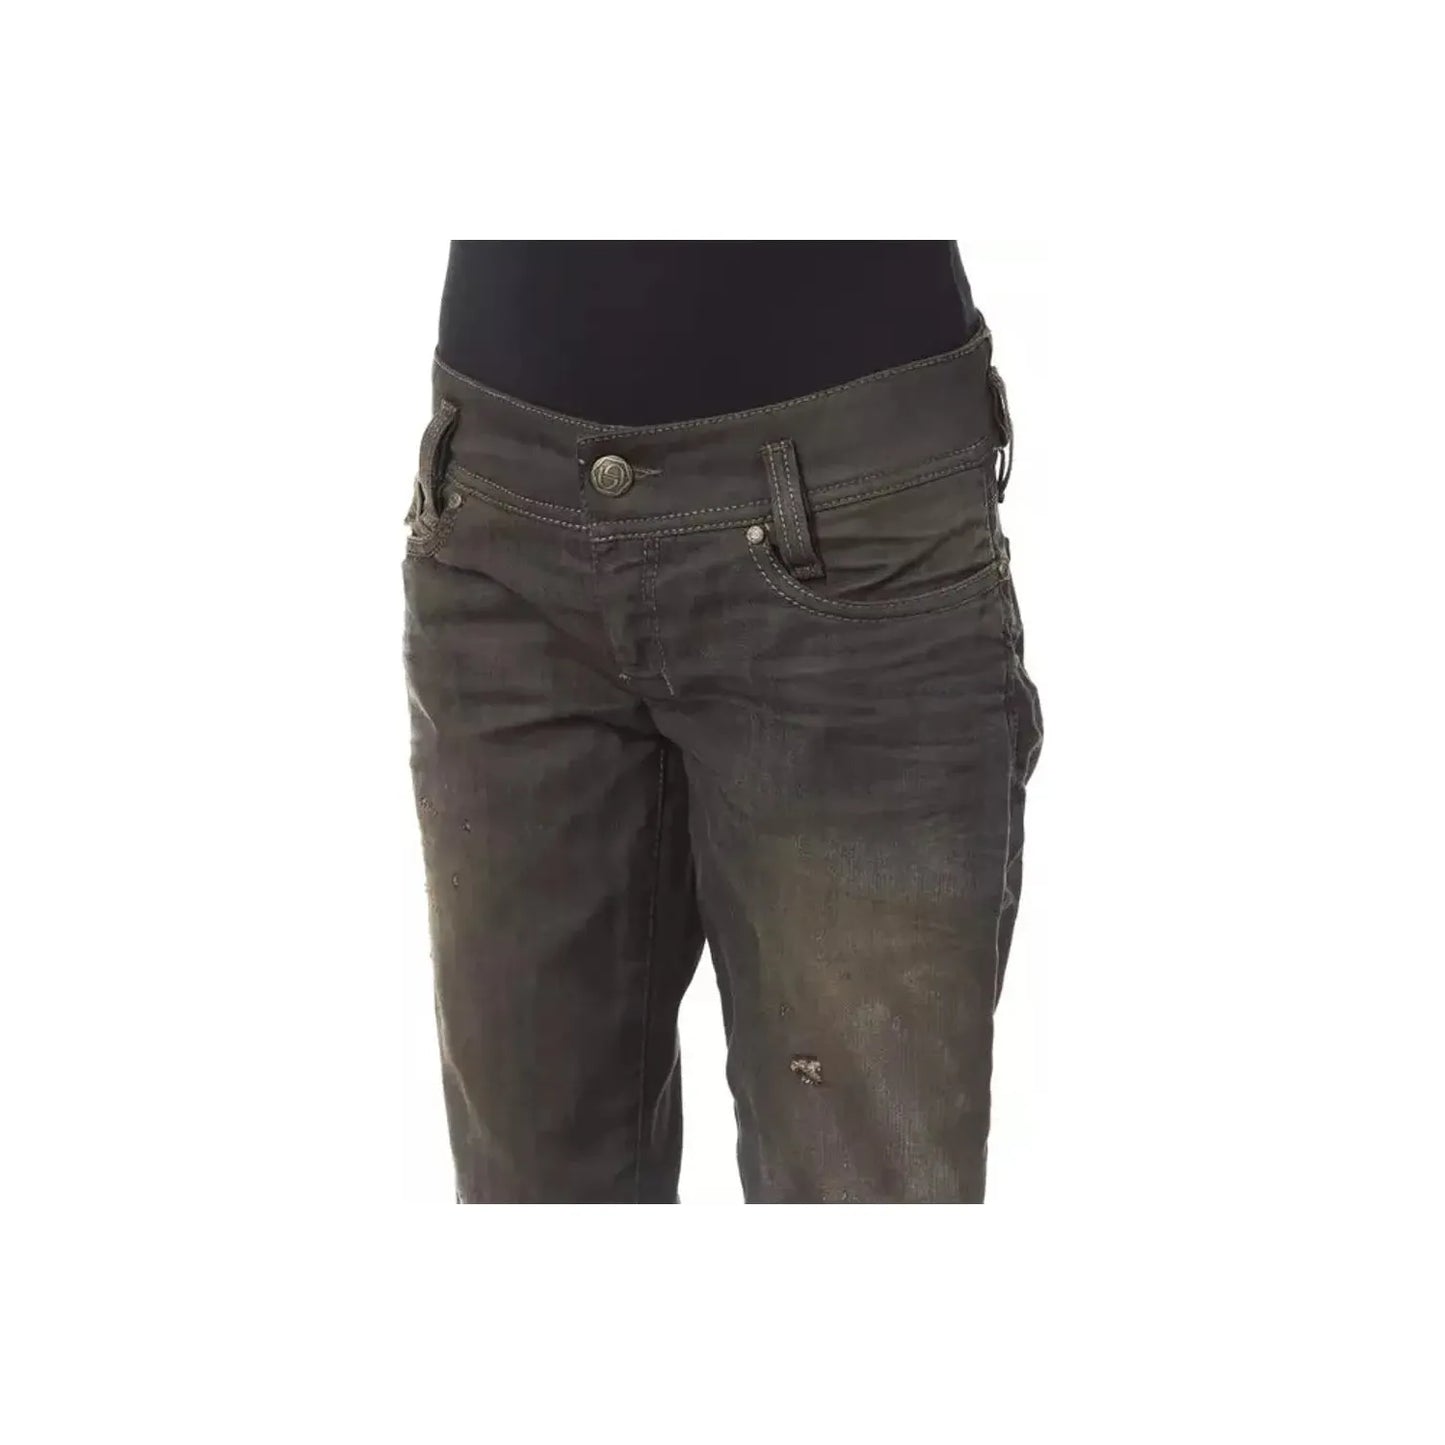 BYBLOS Sleek Black Washed Effect Jeans black-cotton-jeans-pant-17 stock_product_image_17638_145135504-14-c135a4b2-ff4.webp